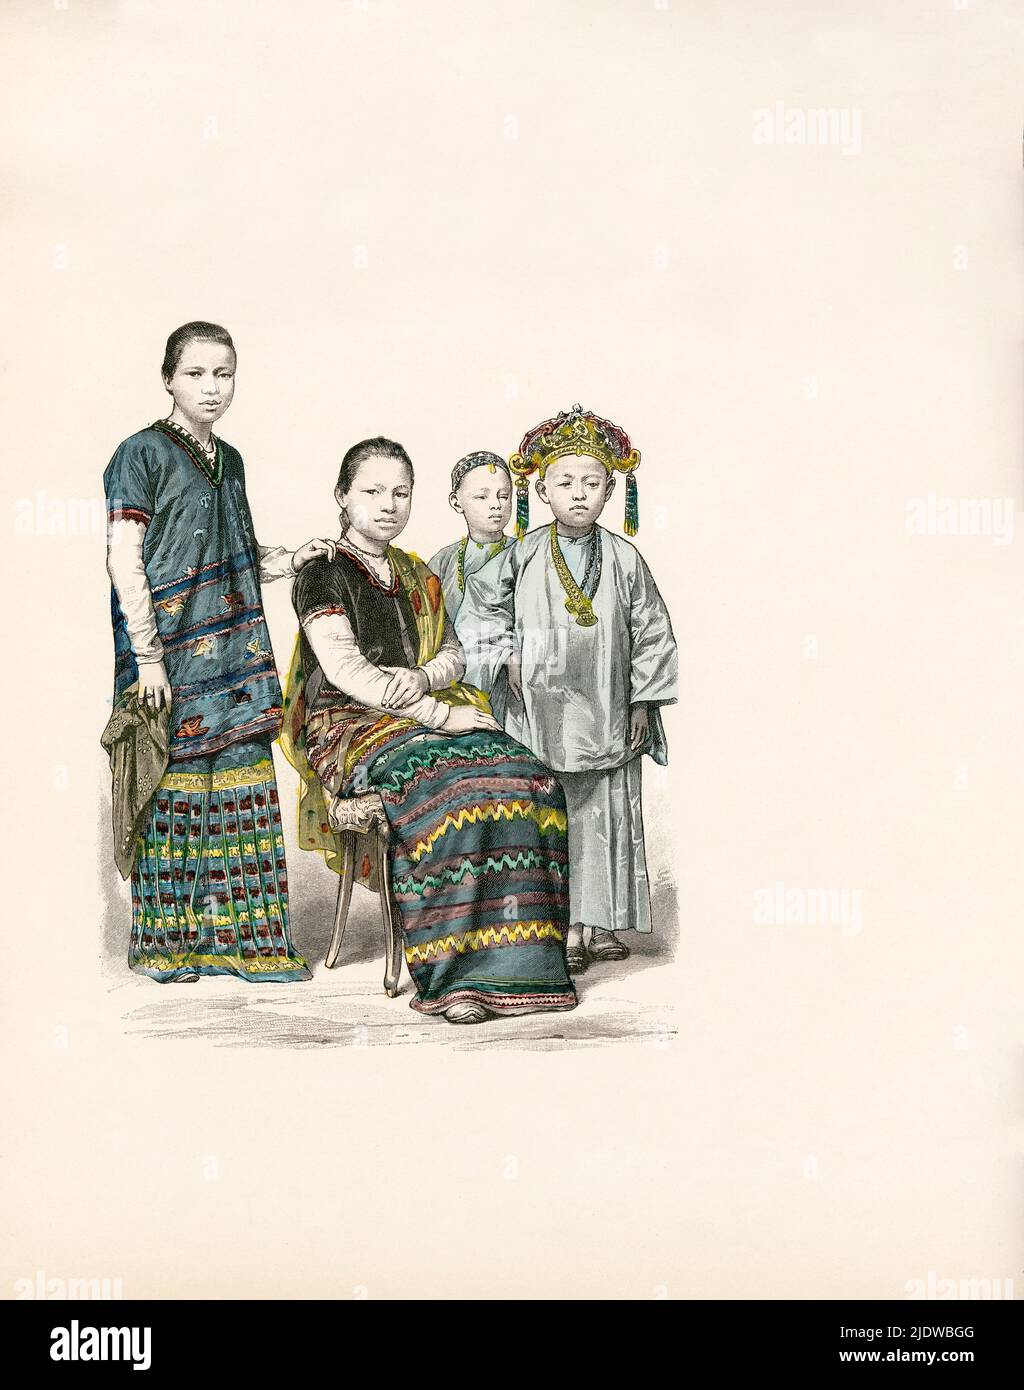 Women of the Karen Tribe, Burma (Myanmar), late 19th Century, Illustration, The History of Costume, Braun & Schneider, Munich, Germany, 1861-1880 Stock Photo